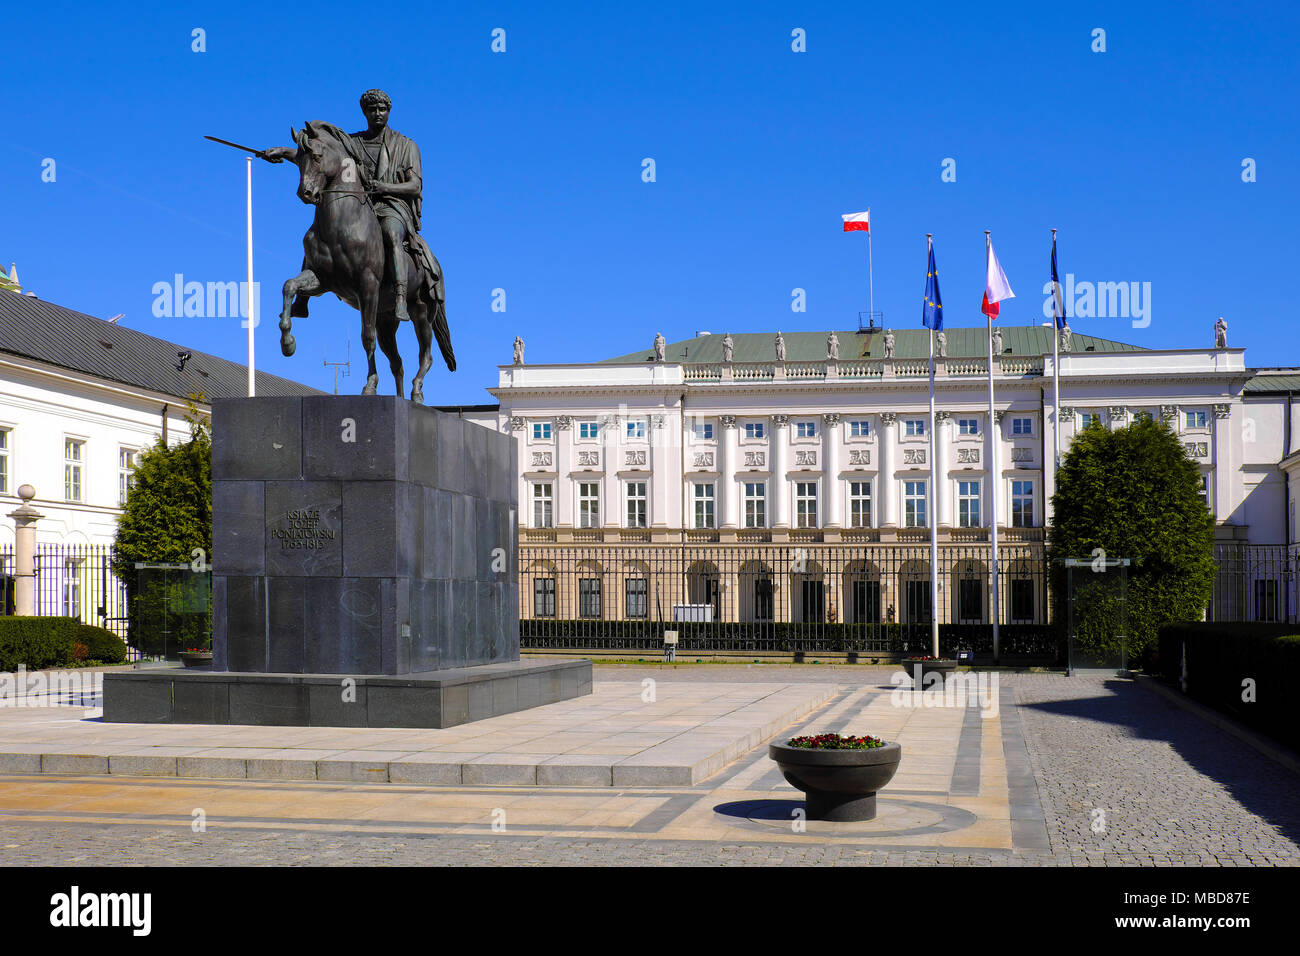 Varsovia, Polonia / Mazovia - 2018/04/07: Casco Histórico de la ciudad antigua de Varsovia - El presidente palacio en la calle Krakowskie Przedmiescie con el príncipe Jozef Poni Foto de stock